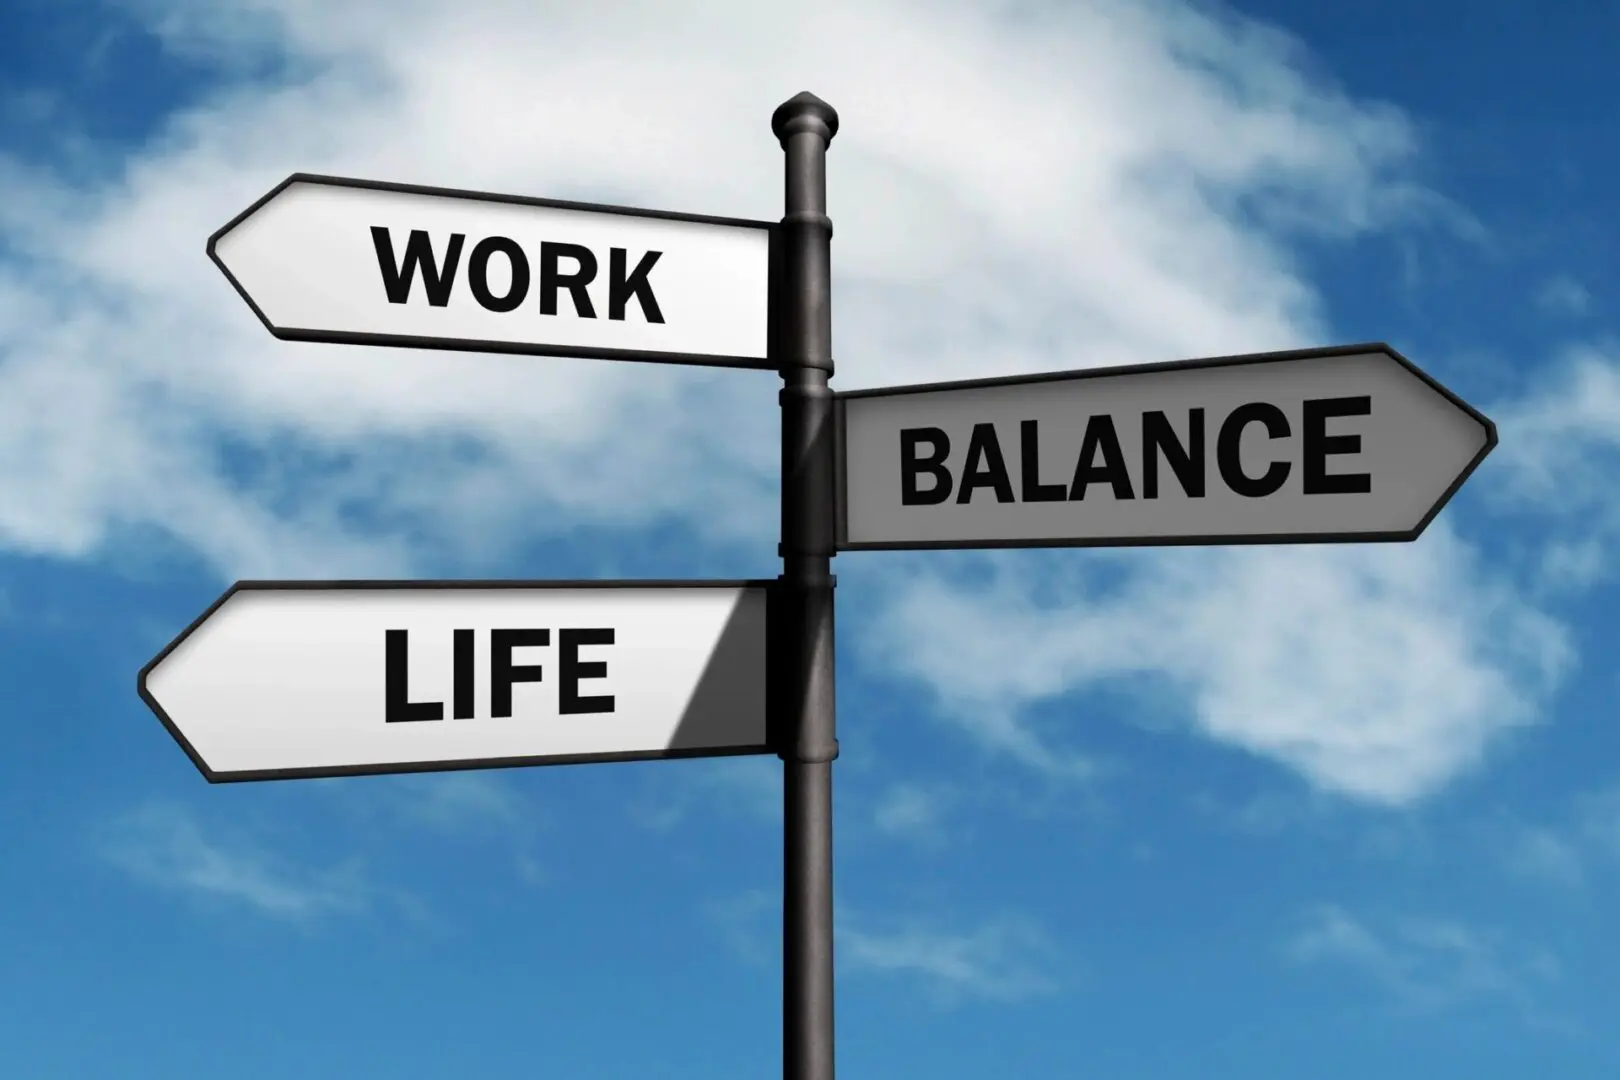 Work, balance, Life